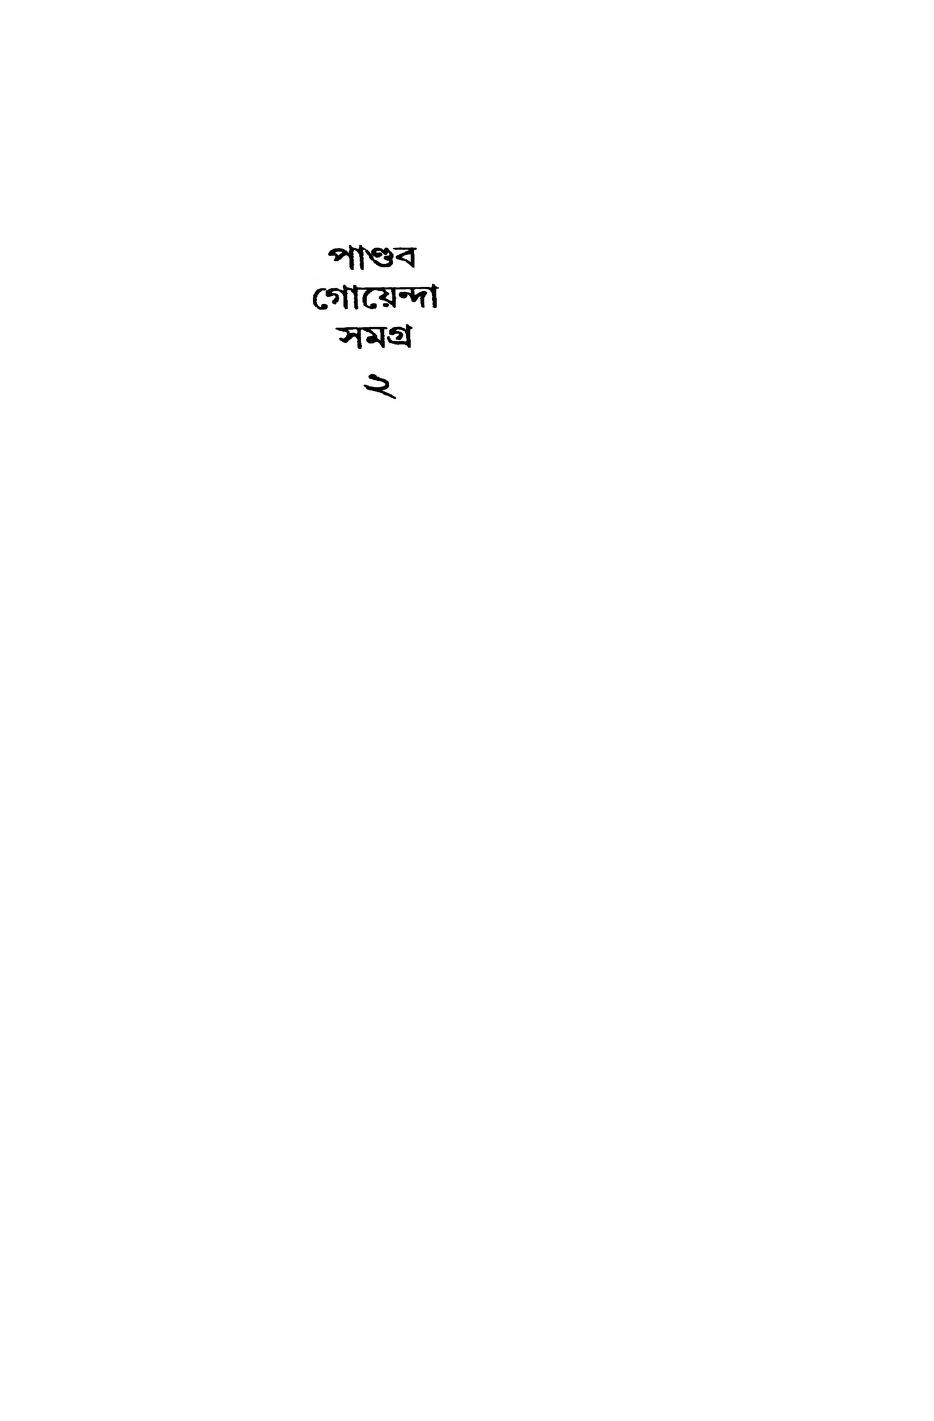 Pandab Goyenda Samagra Vol. 2 : Chattopadhyay, Shashthipada : Free  Download, Borrow, and Streaming : Internet Archive